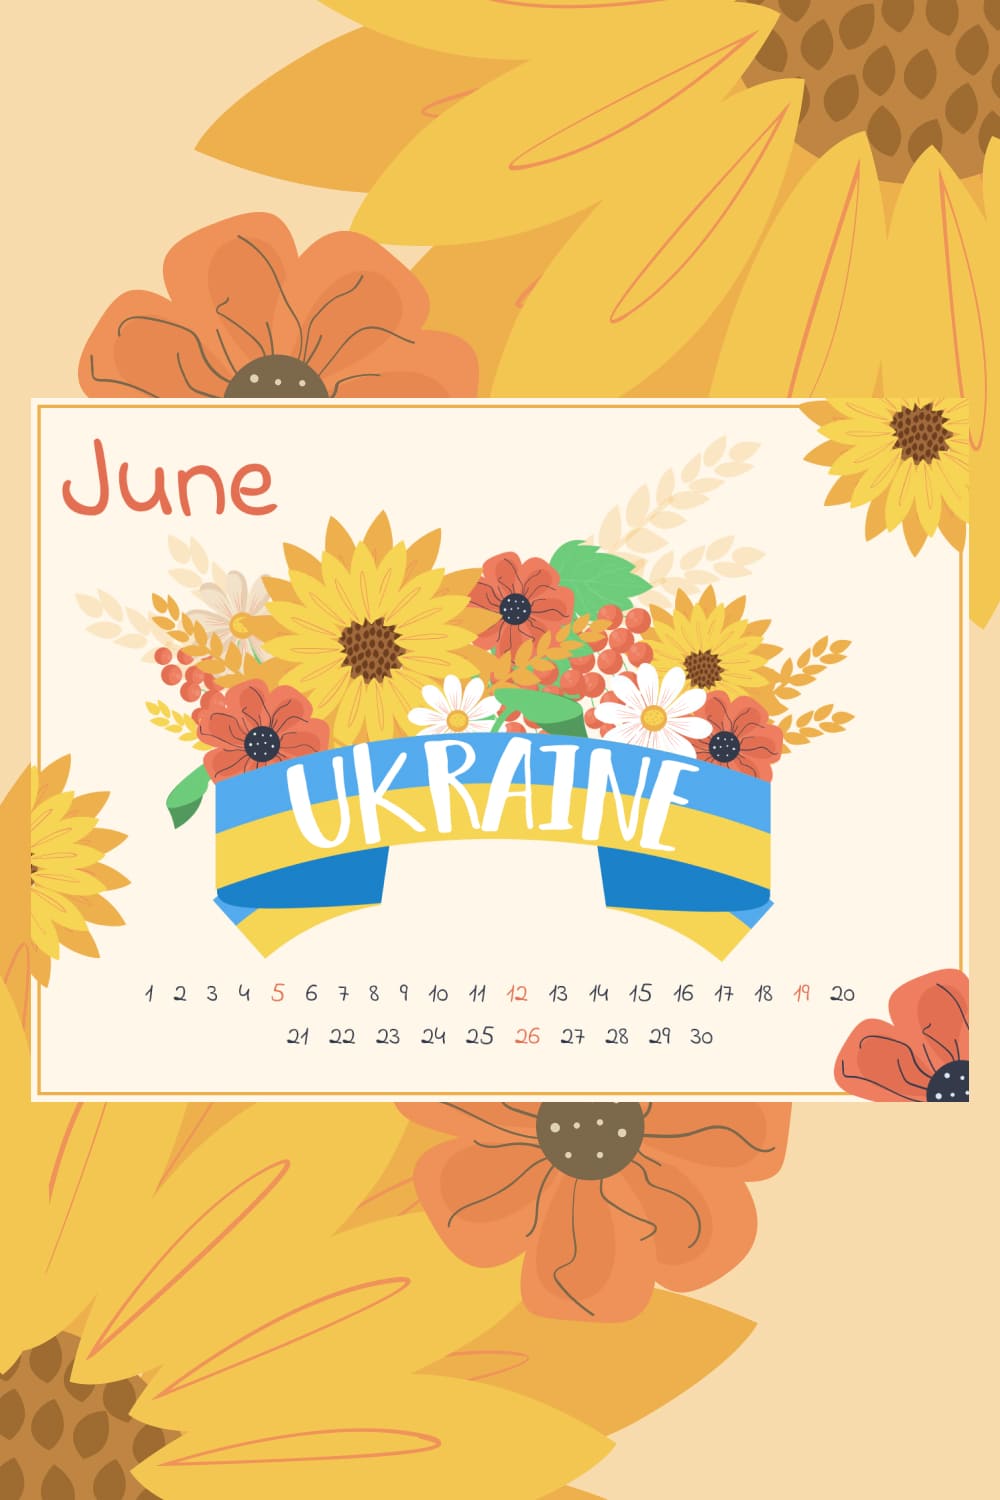 Colorful calendar with Ukraine flag.